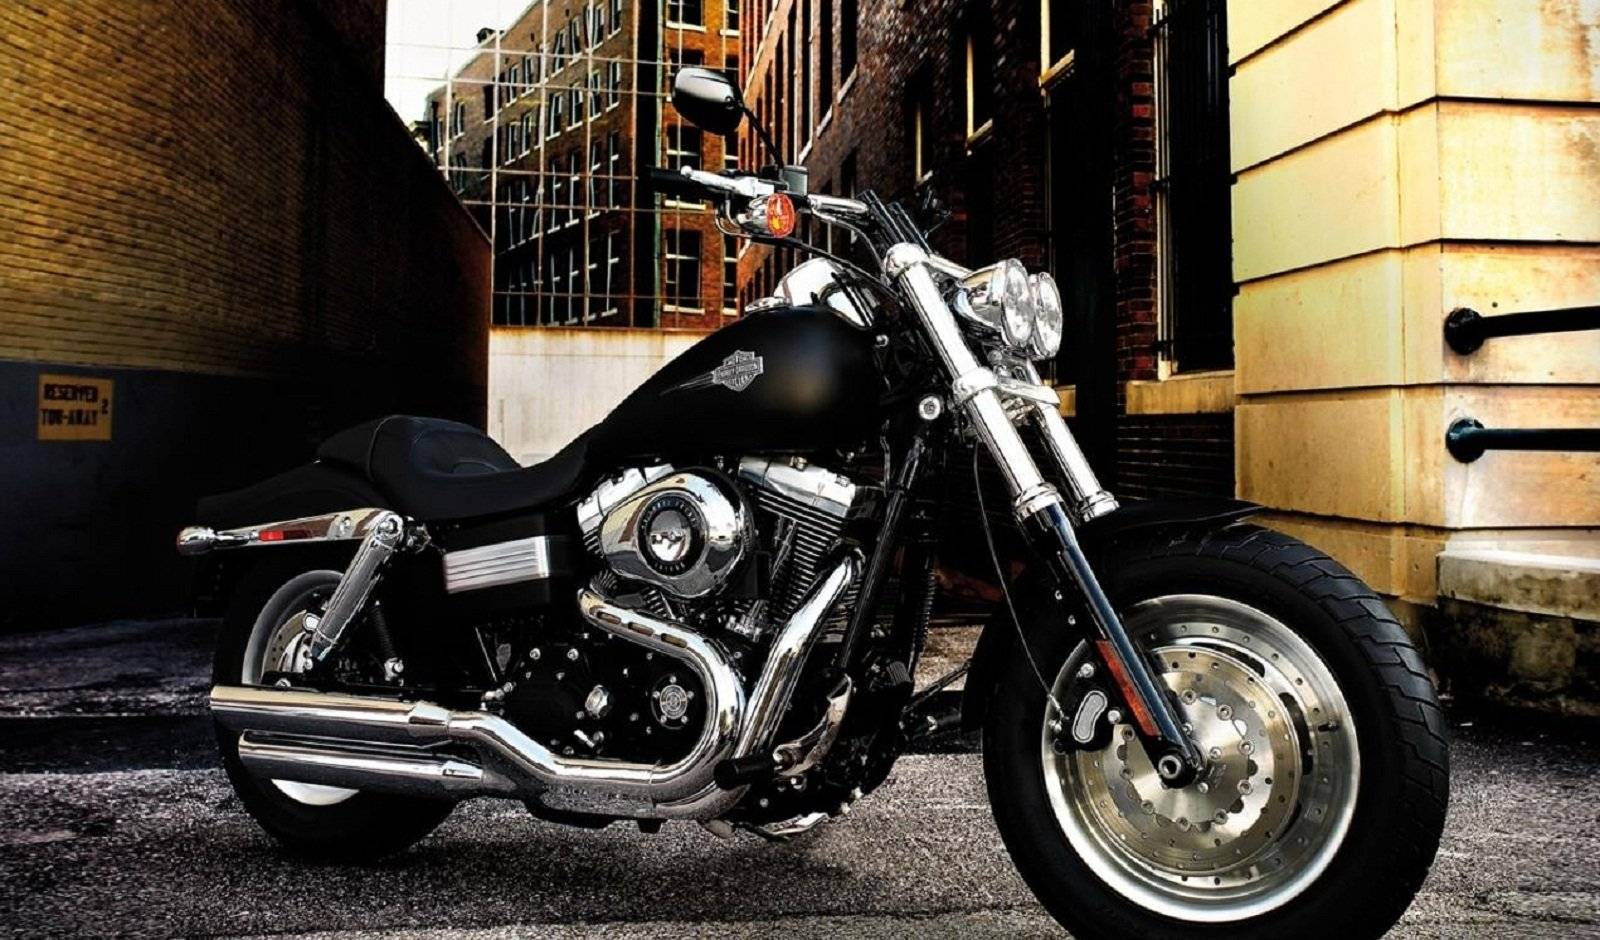 Harley-davidson fat bob 114 price, images, mileage & reviews